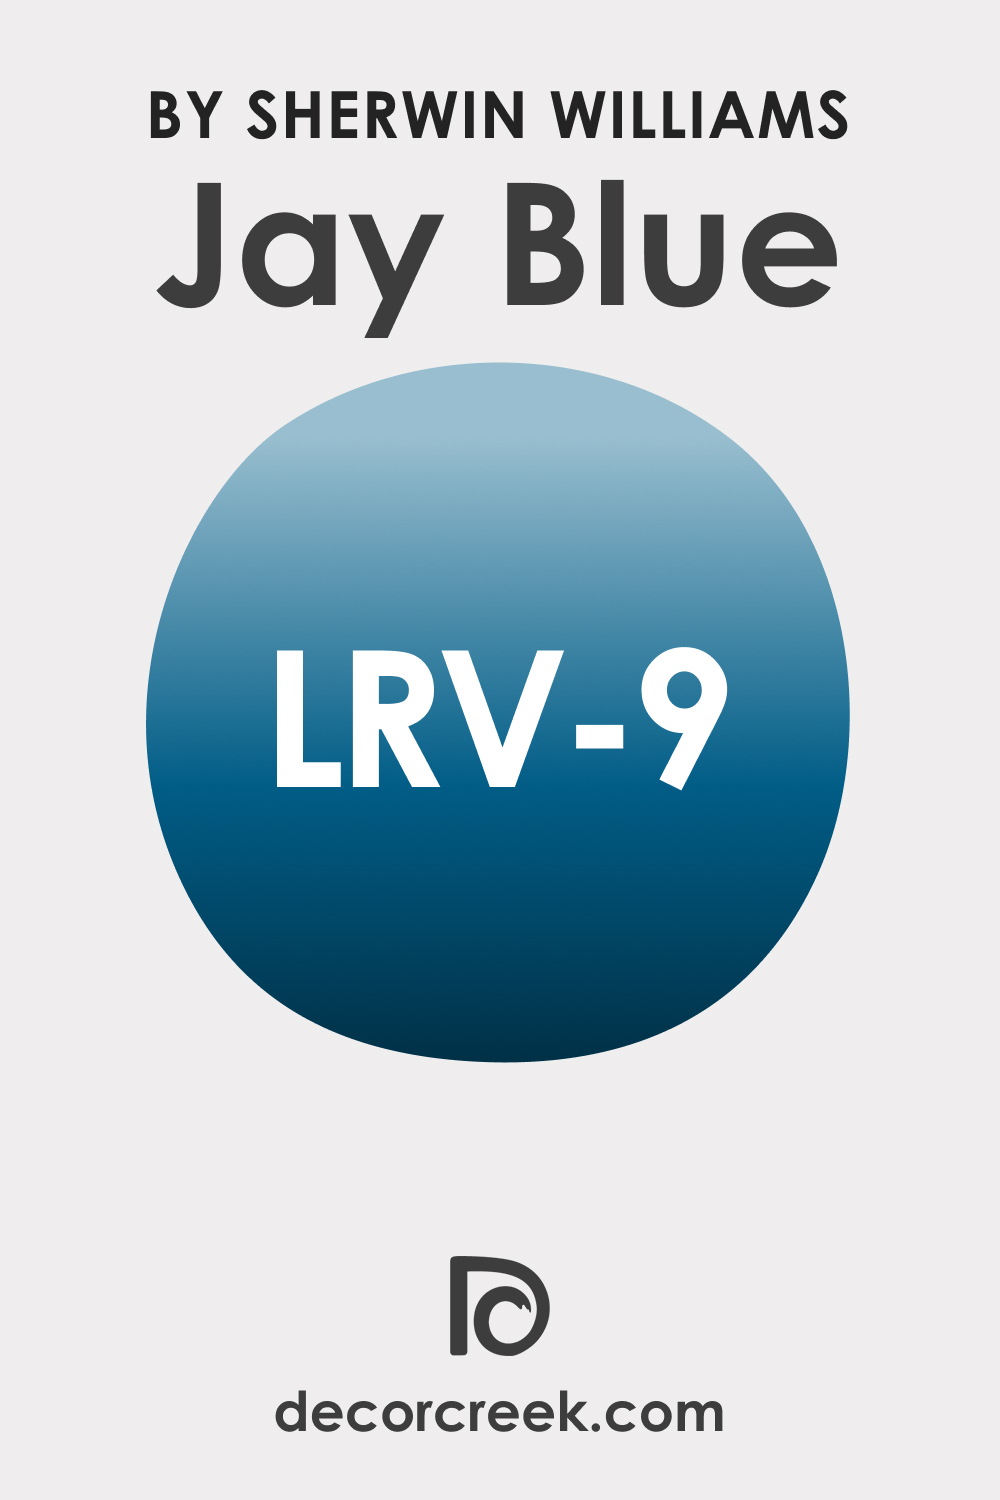 LRV of SW 6797 Jay Blue